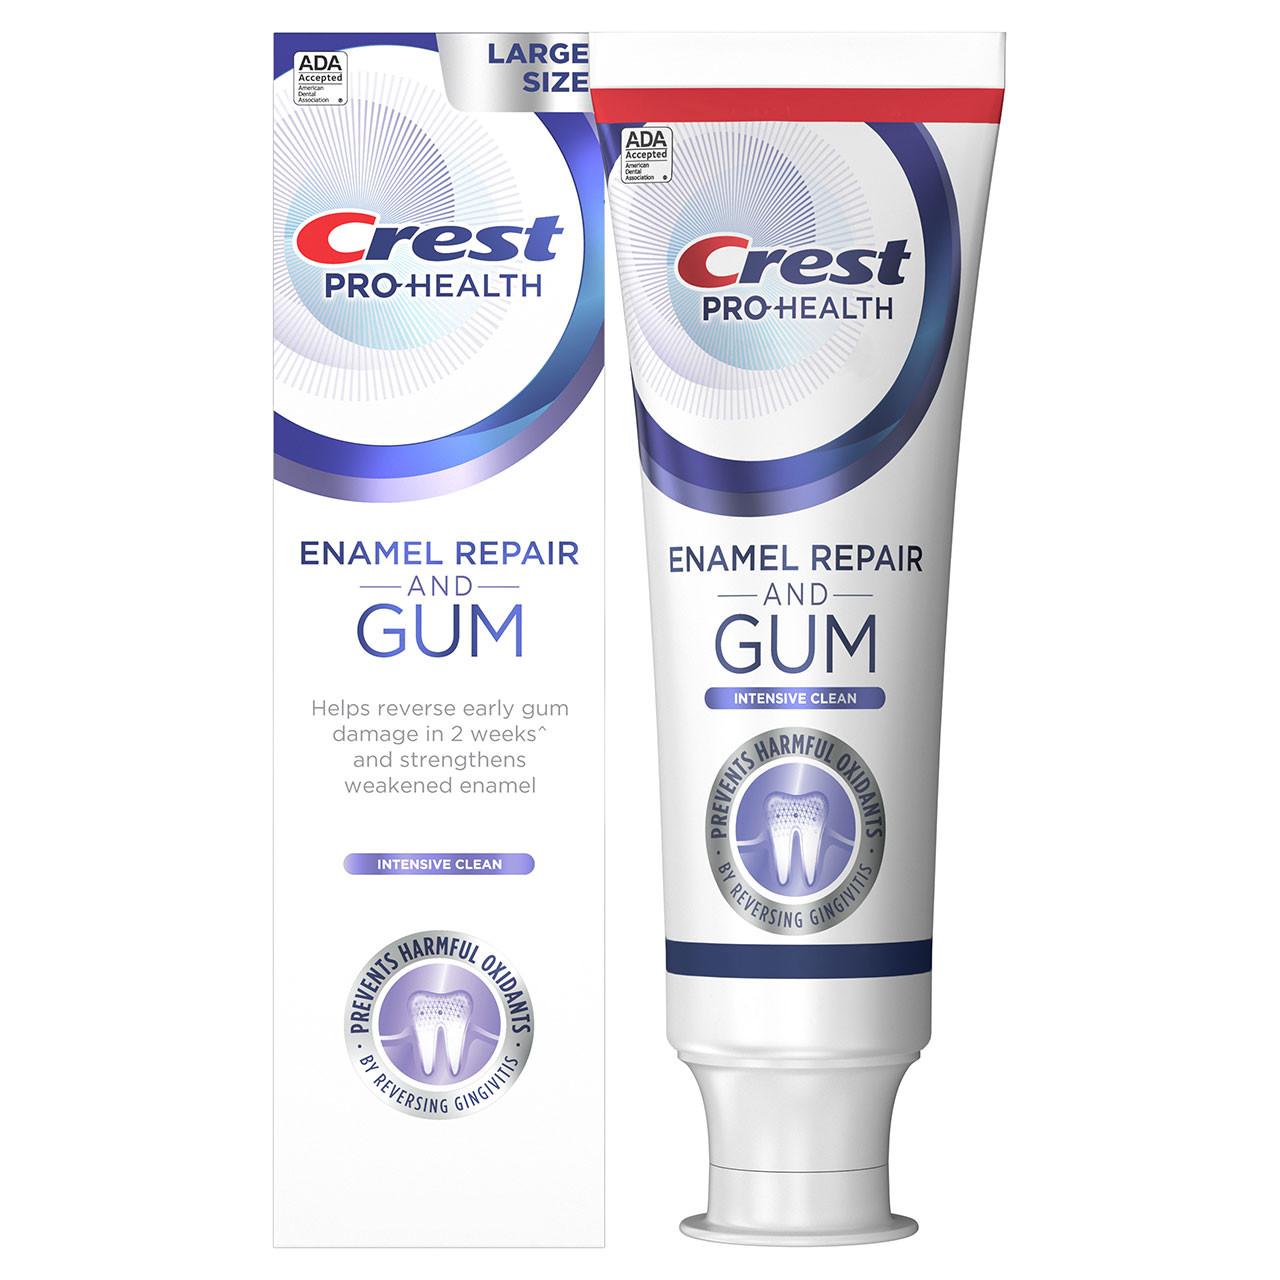 Crest Pro-Health Enamel Repair and Gum Toothpaste for $0.49